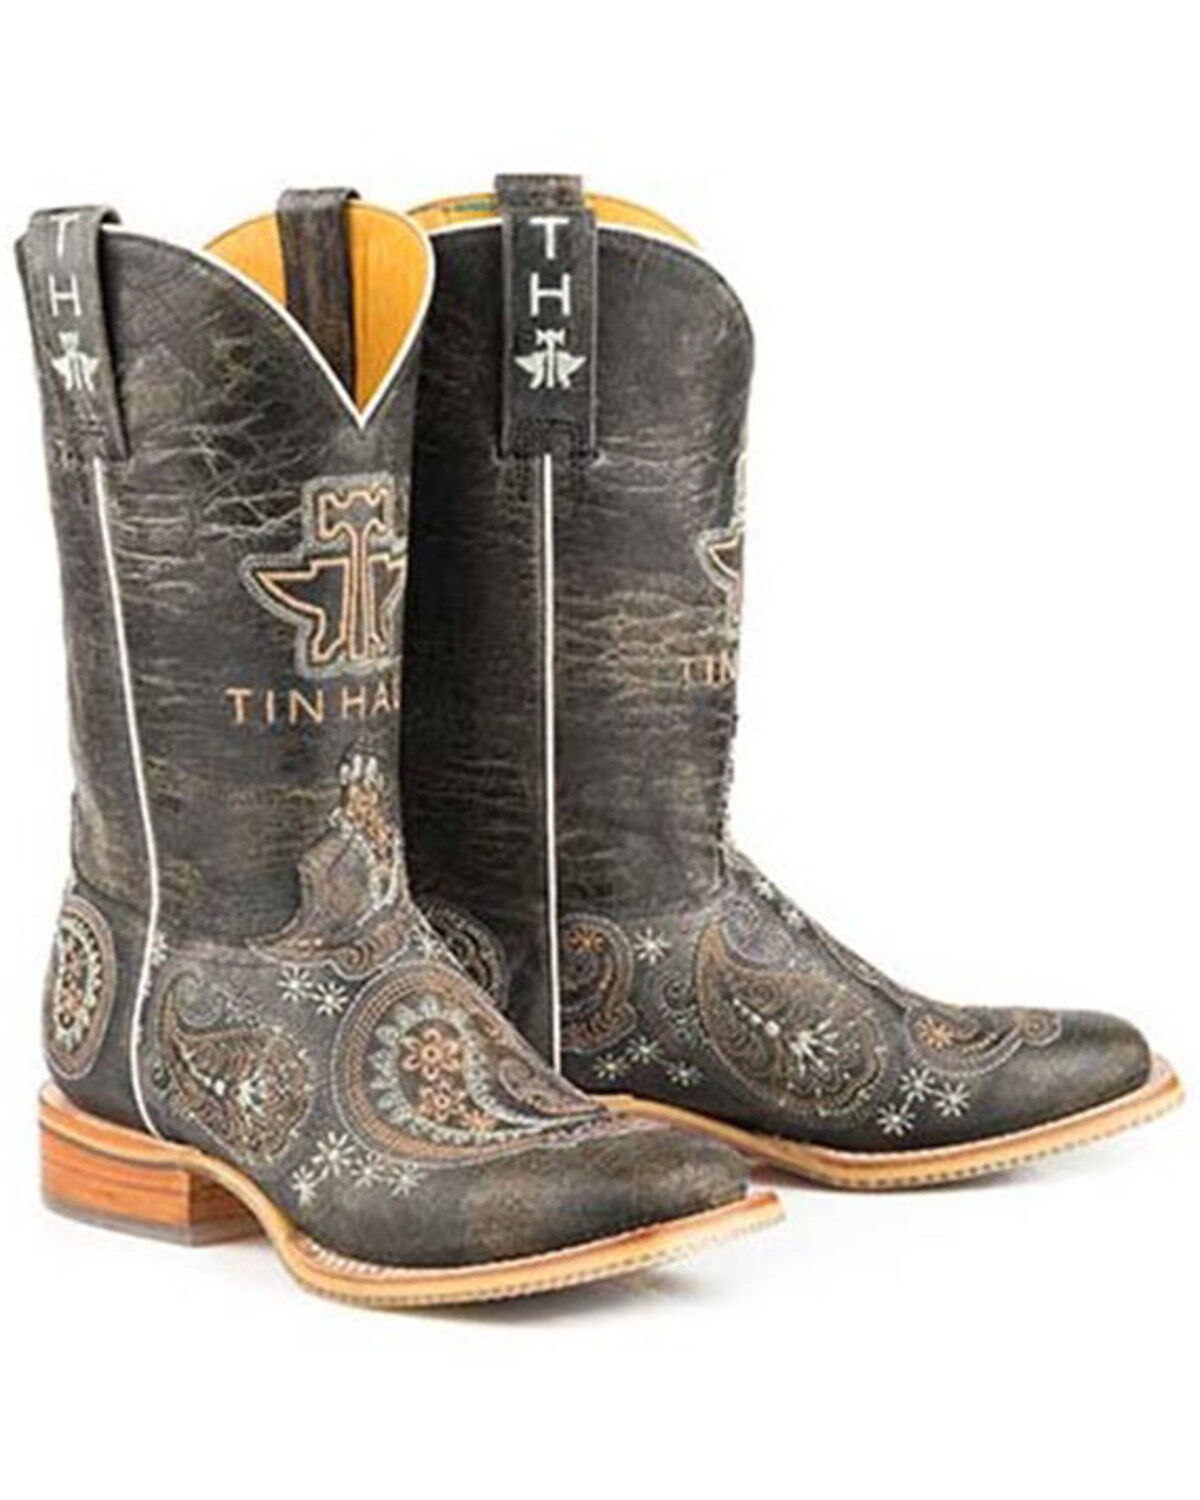 14-021-0007-1370 Ta Tin Haul Women's Cacstitch Western Boot Wide Square Toe 